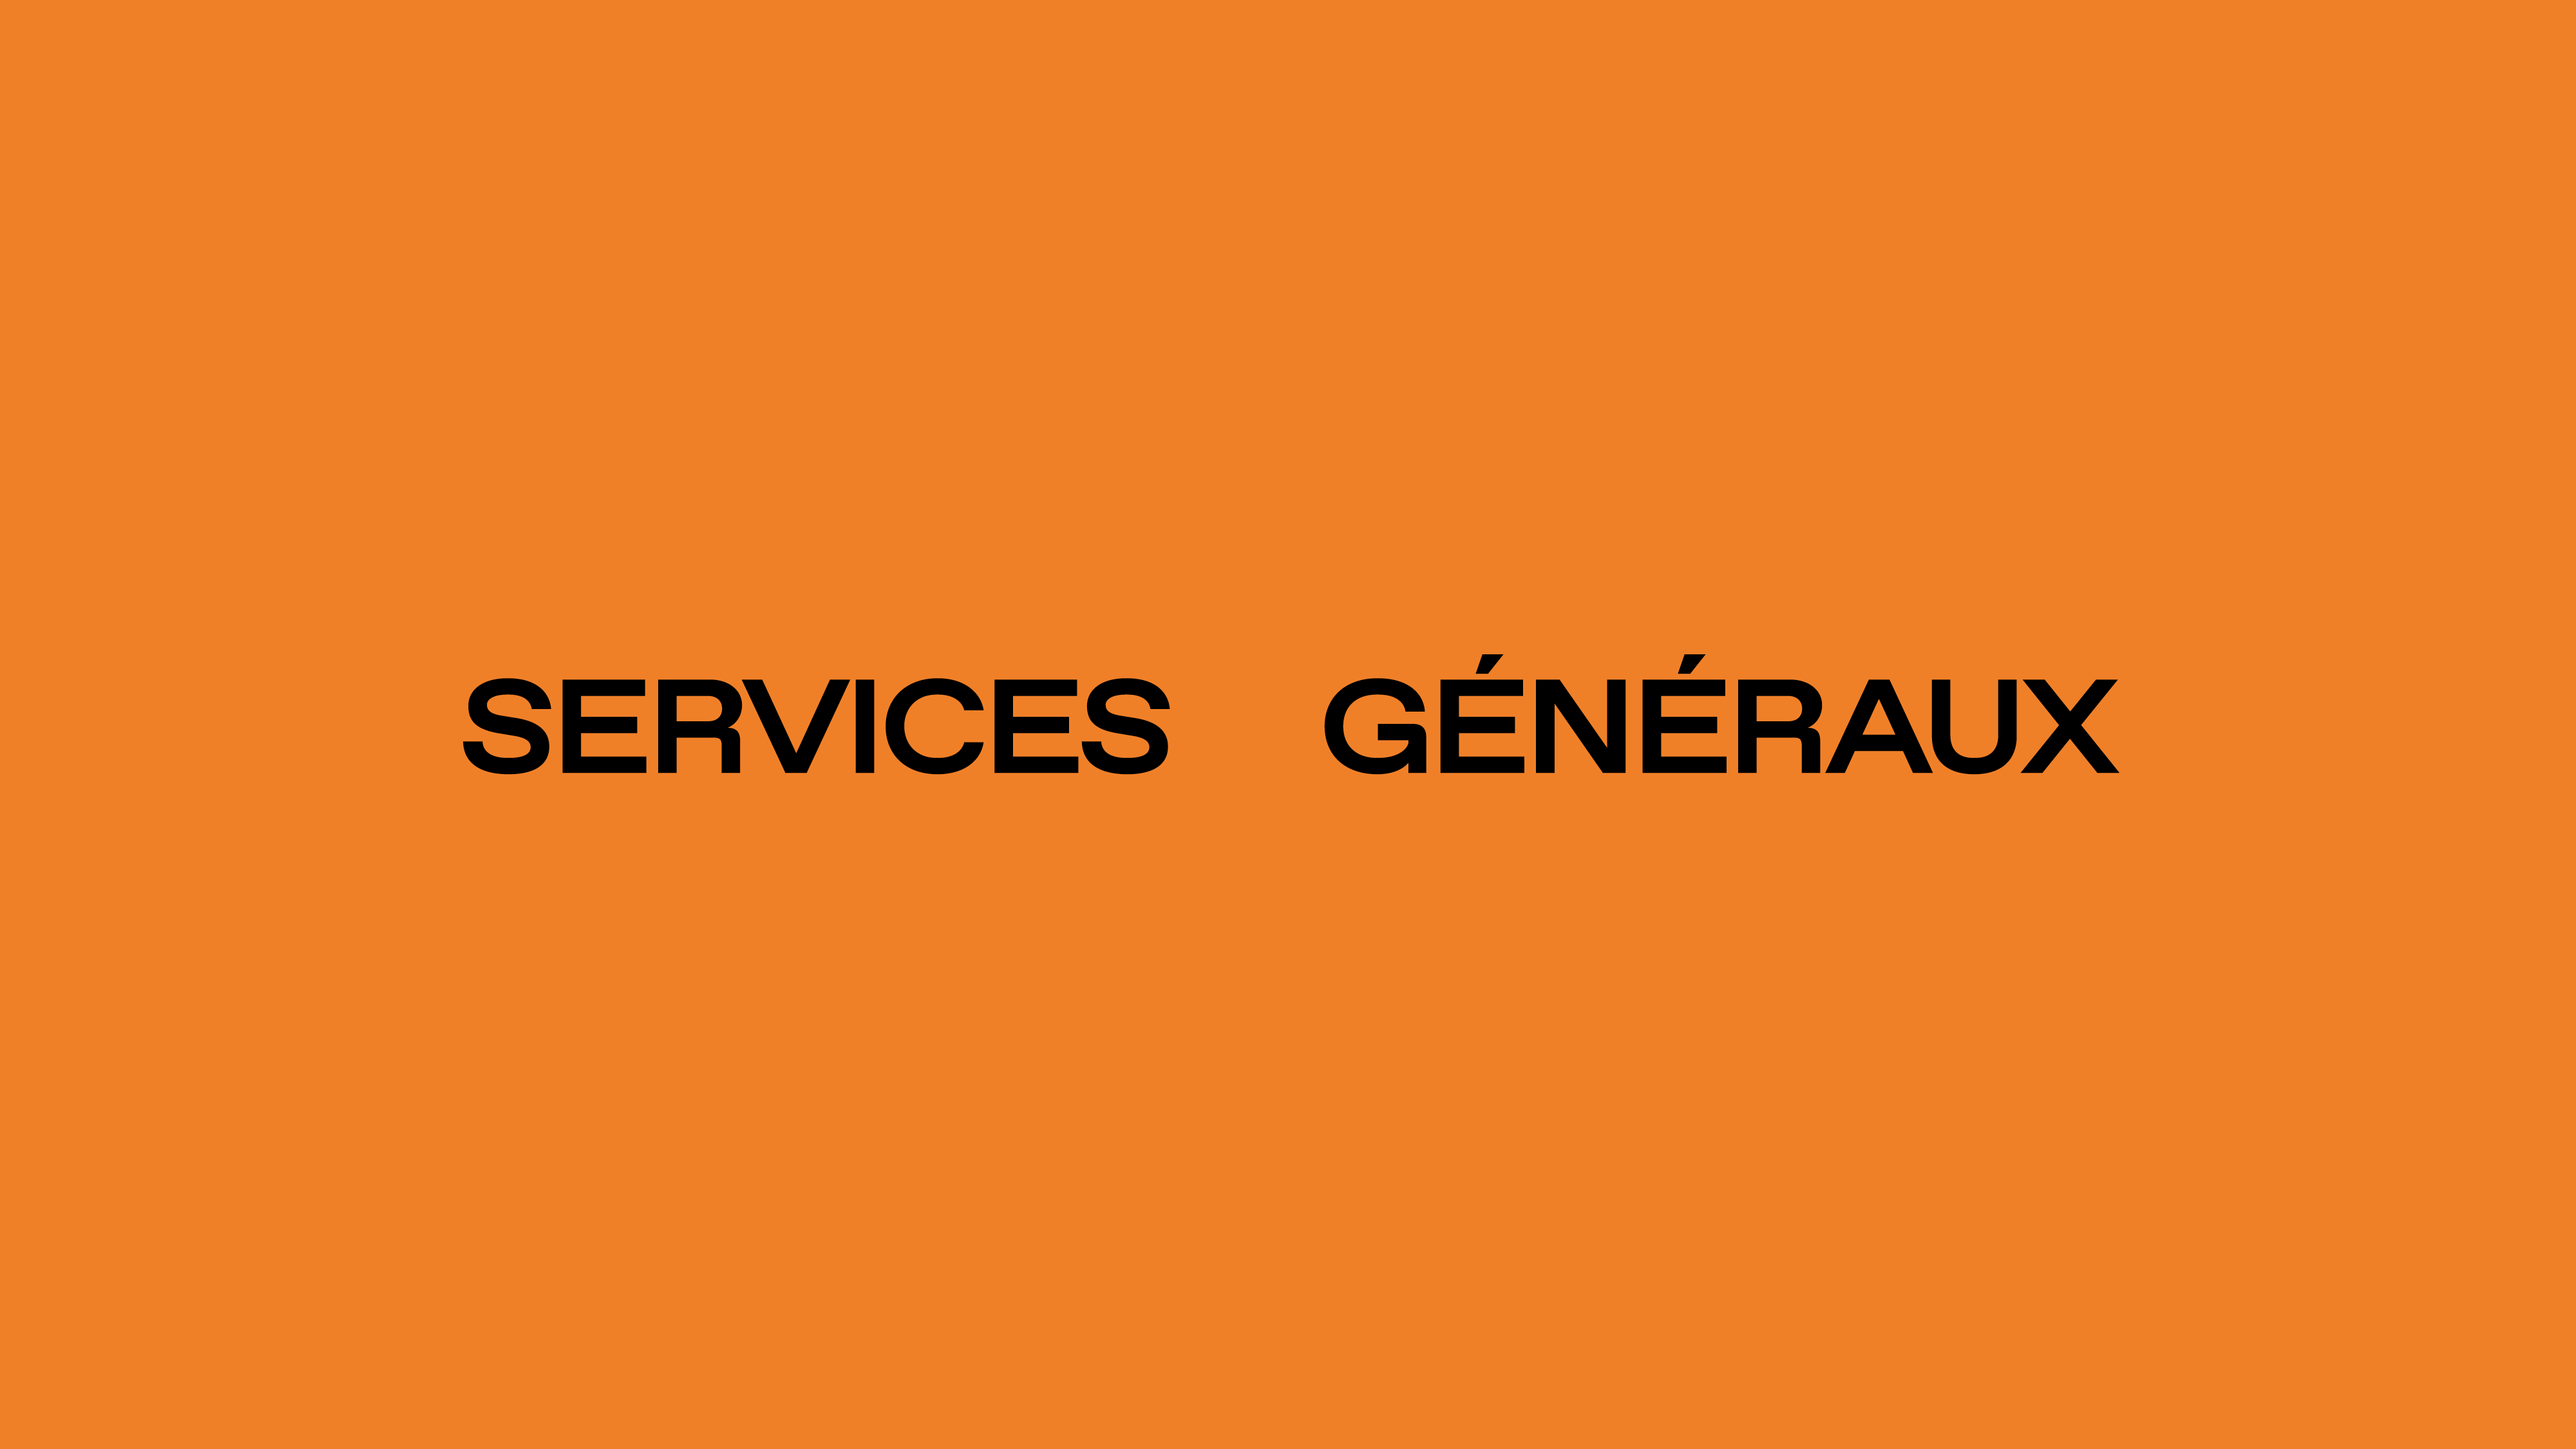 (c) Generaux.services